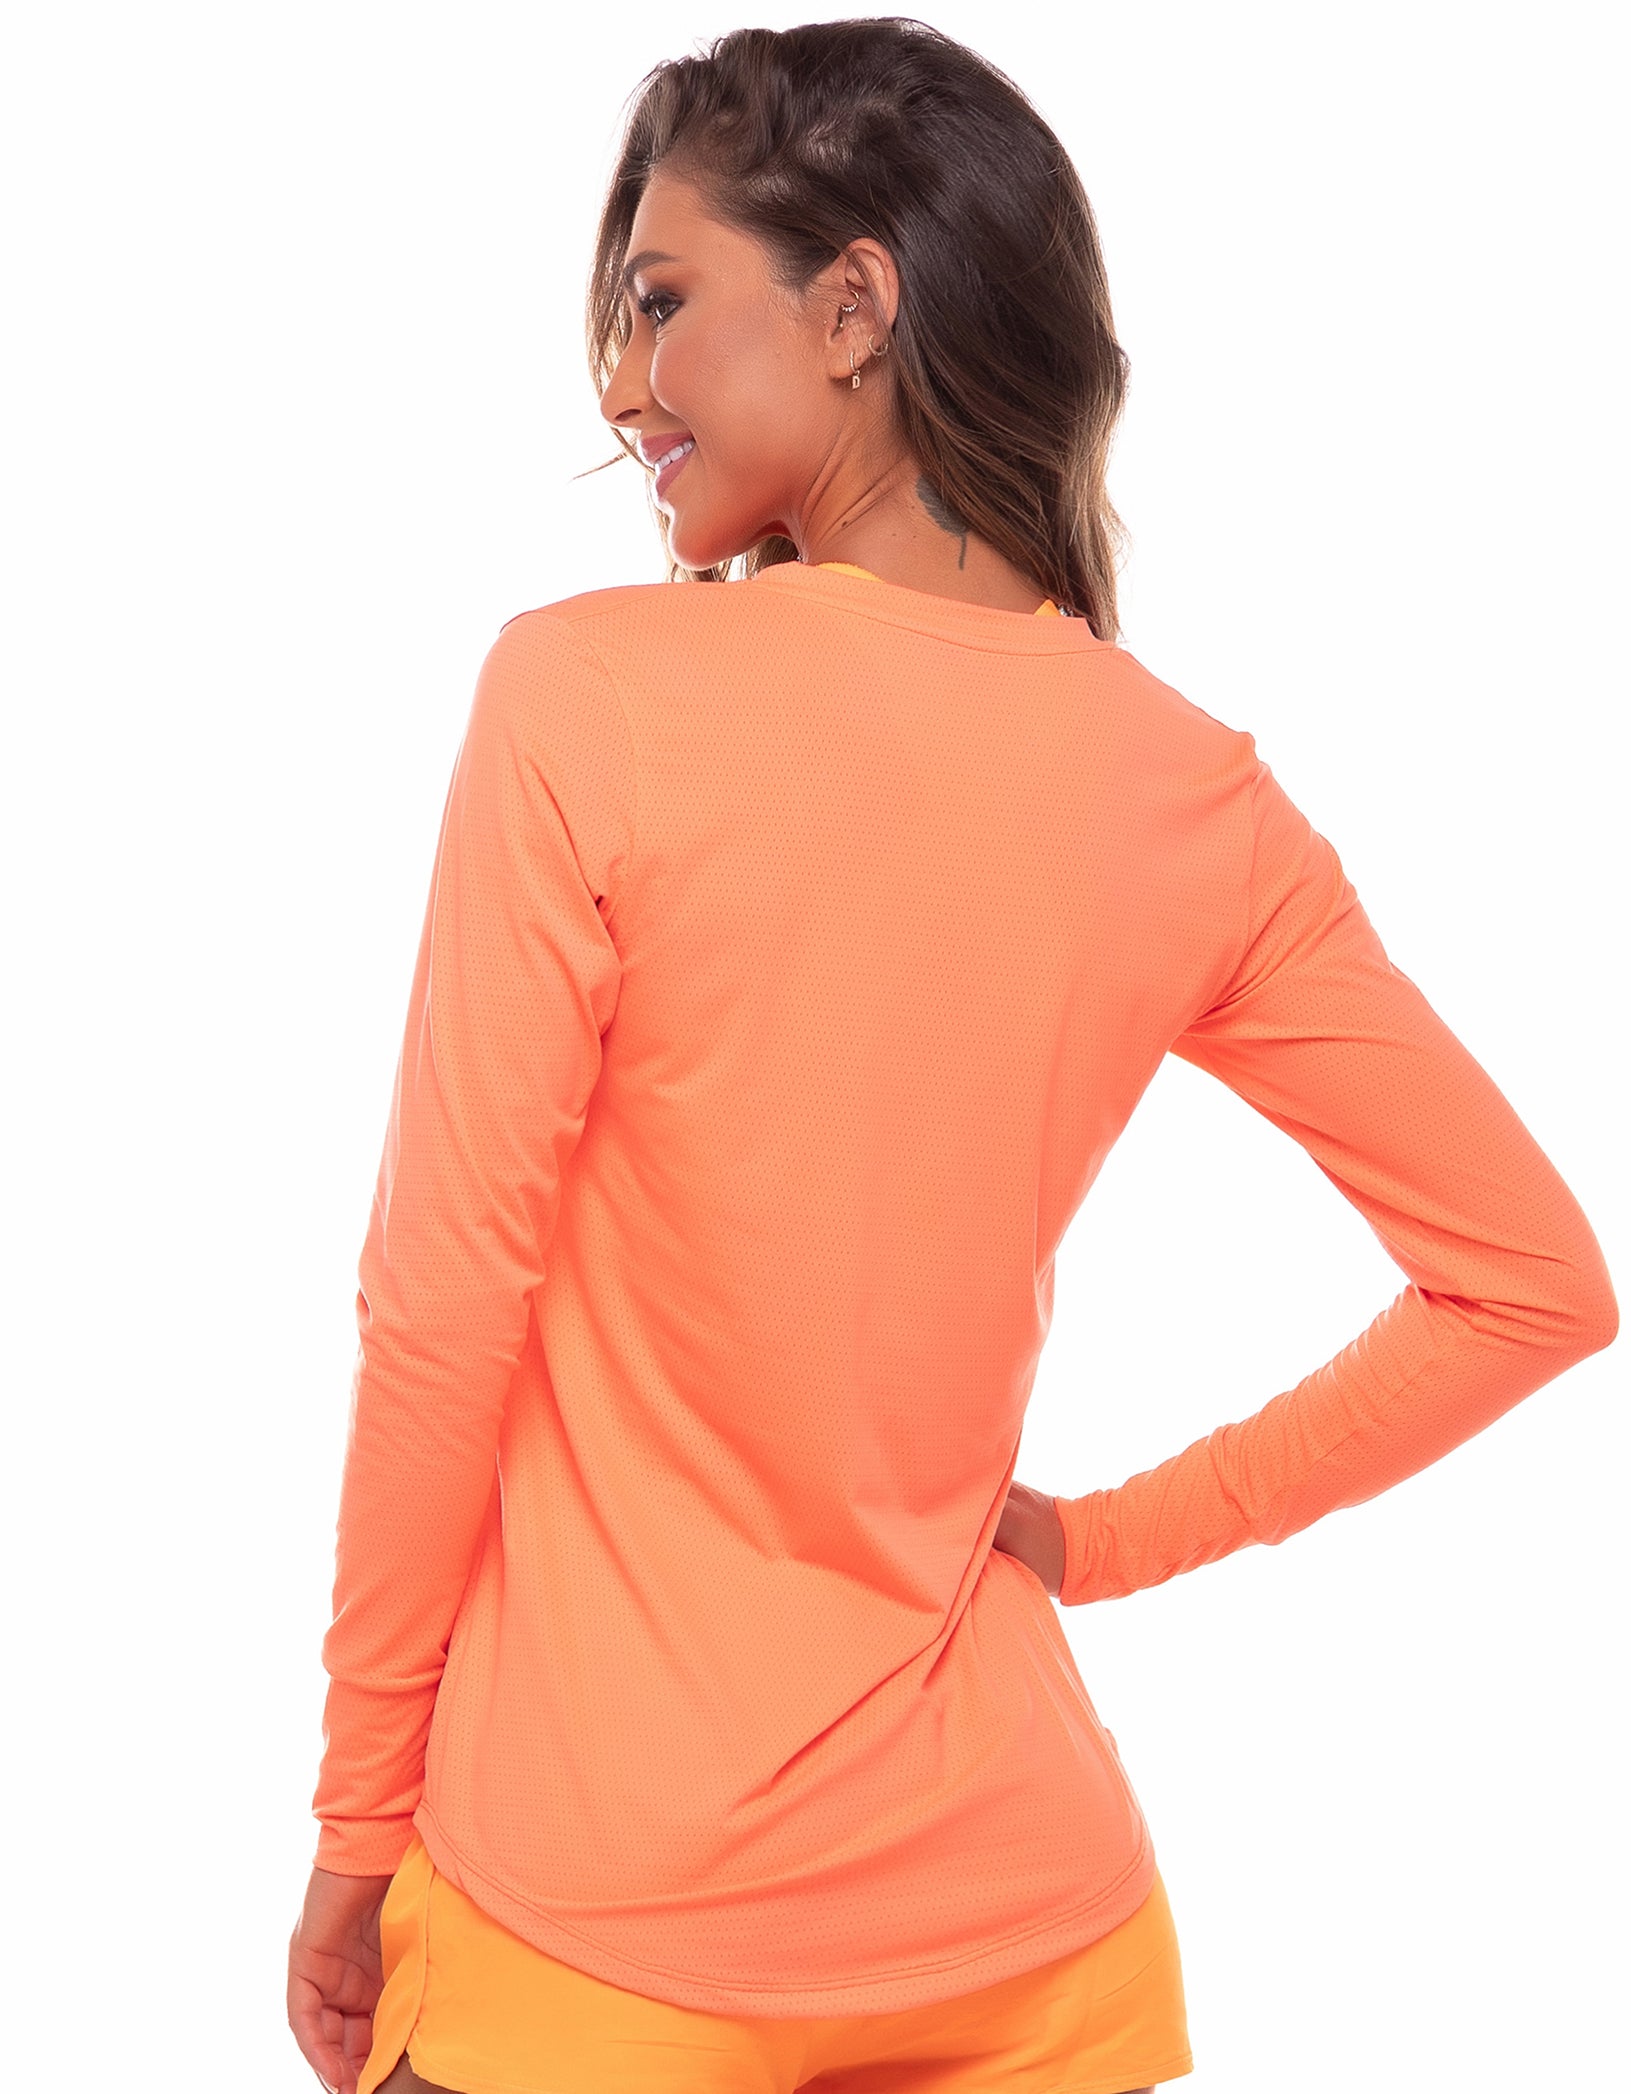 Vestem - Shirt Dry Fit Long Sleeve Janice Orange Neon - BML16.C0007